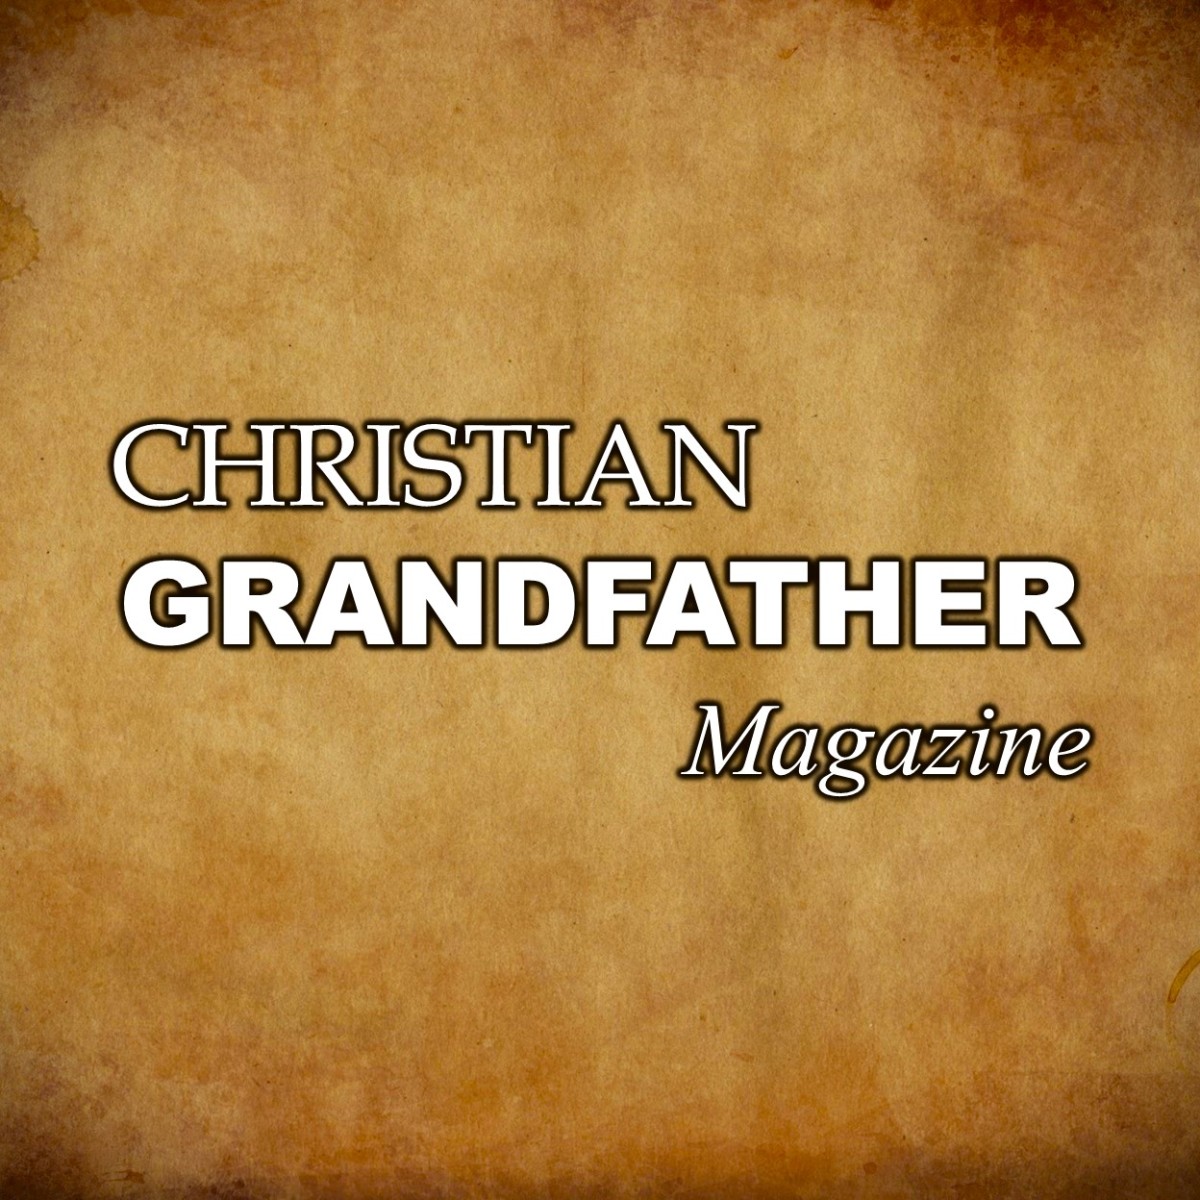 Thank You Christian Grandfather Mag!